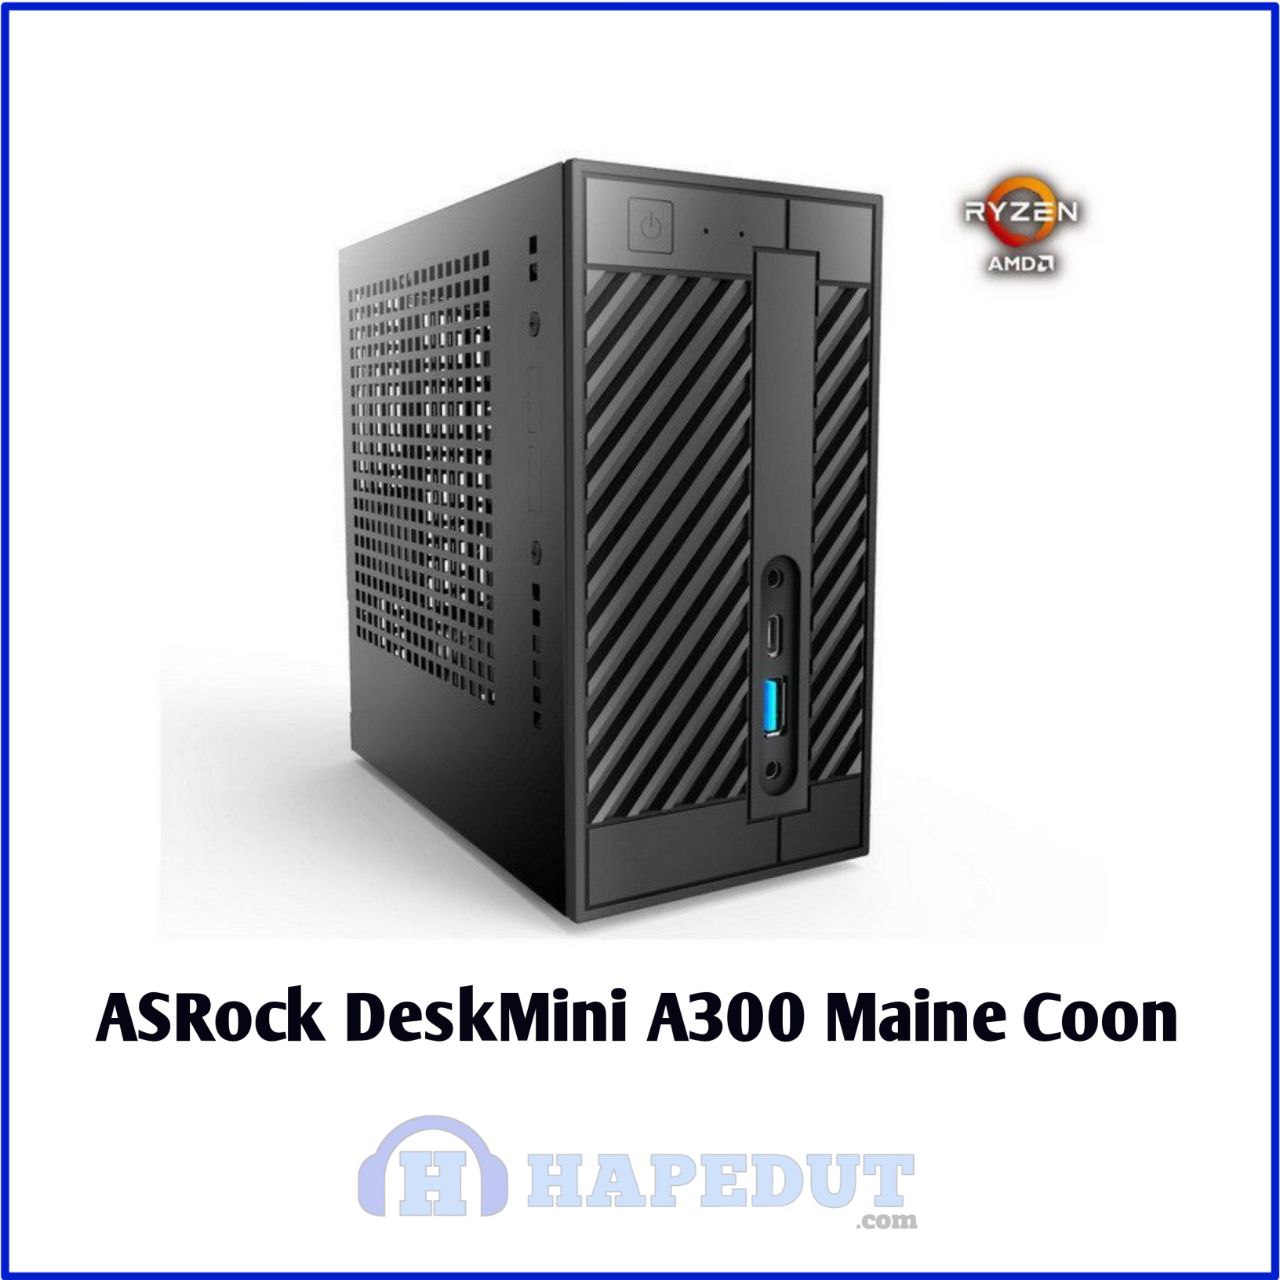 ASRock DeskMini A300 Maine Coon : Hapedut